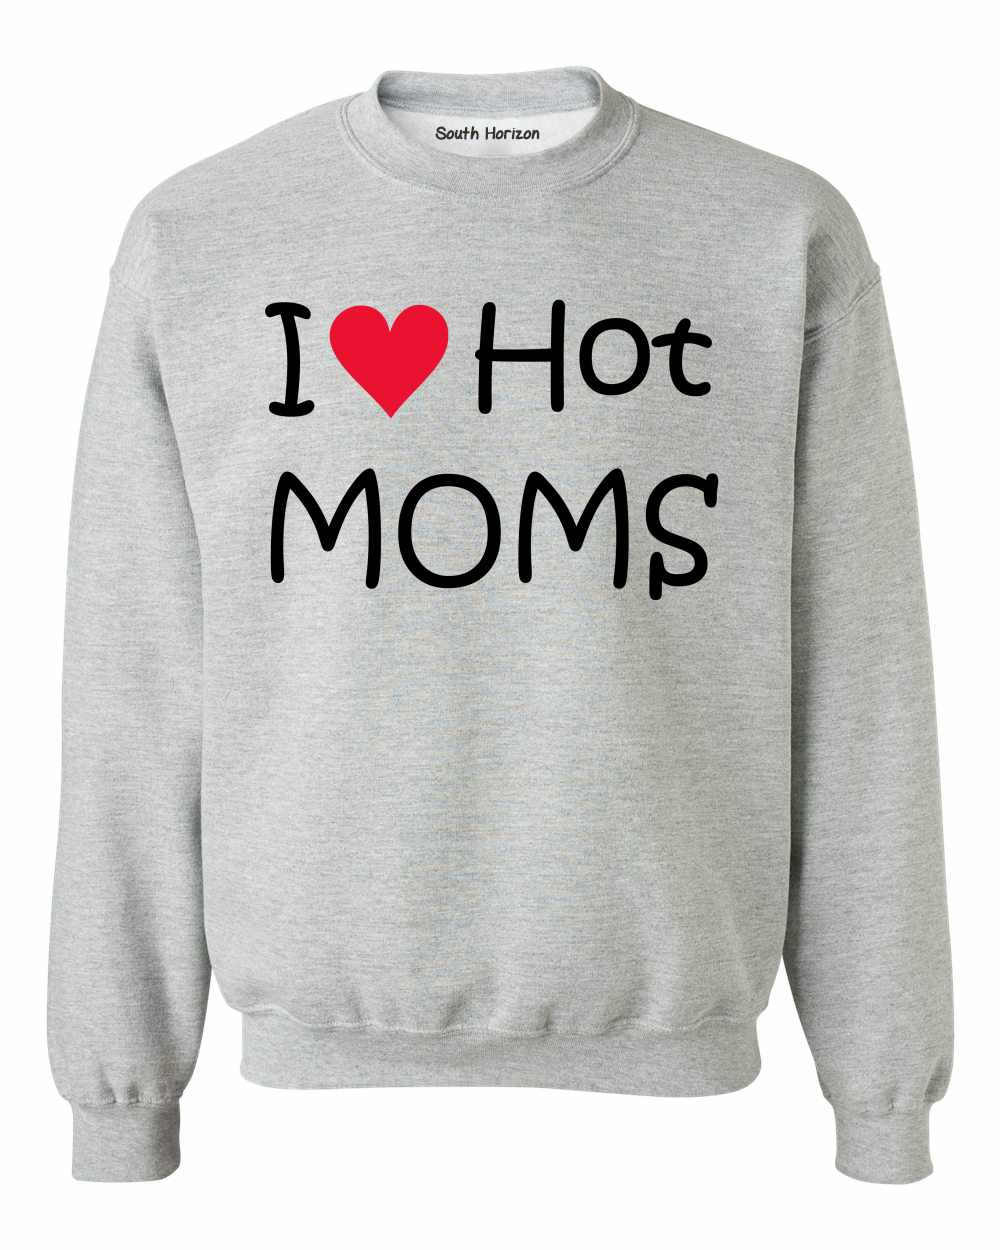 I LOVE HOT MOMS Sweat Shirt